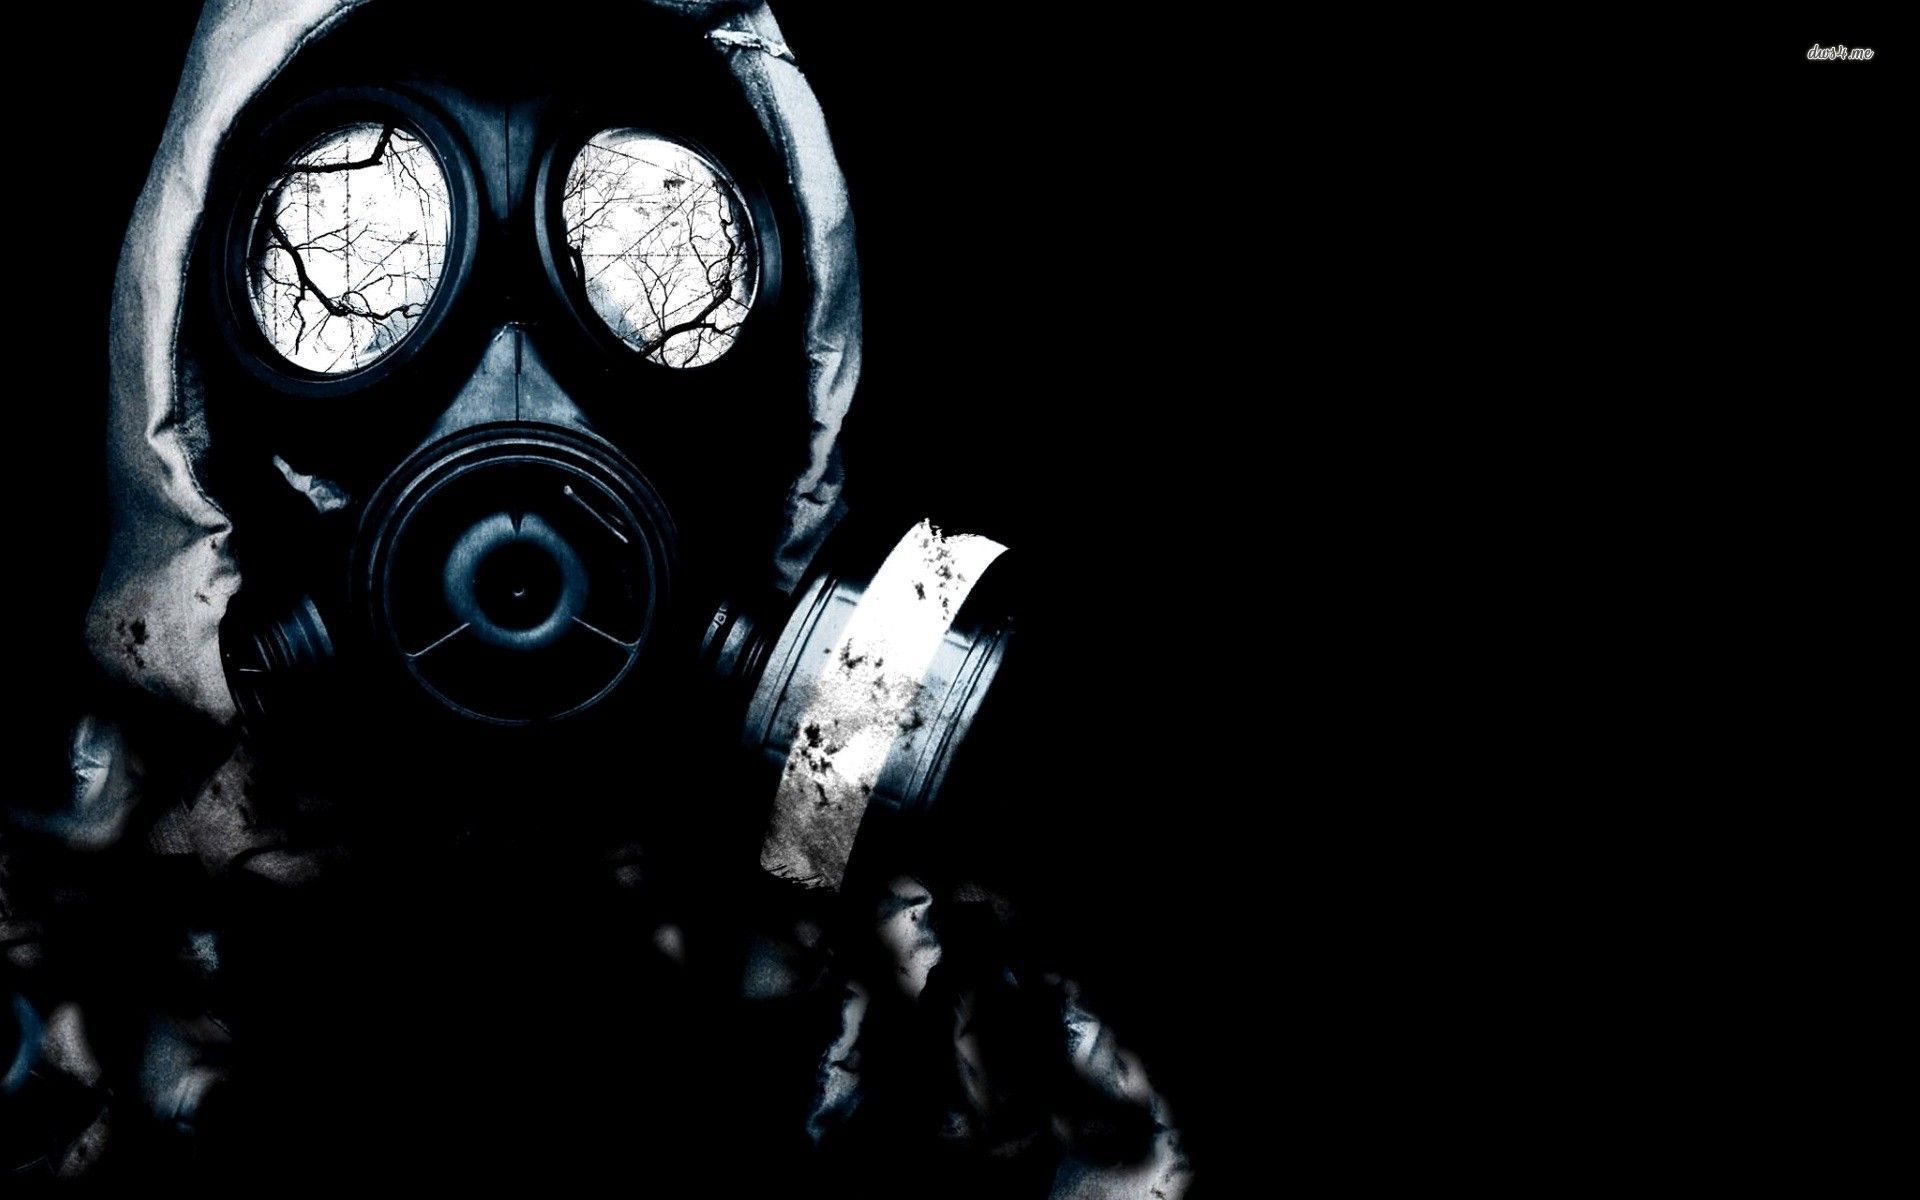 Creepy gas mask wallpaper - Digital Art wallpapers -